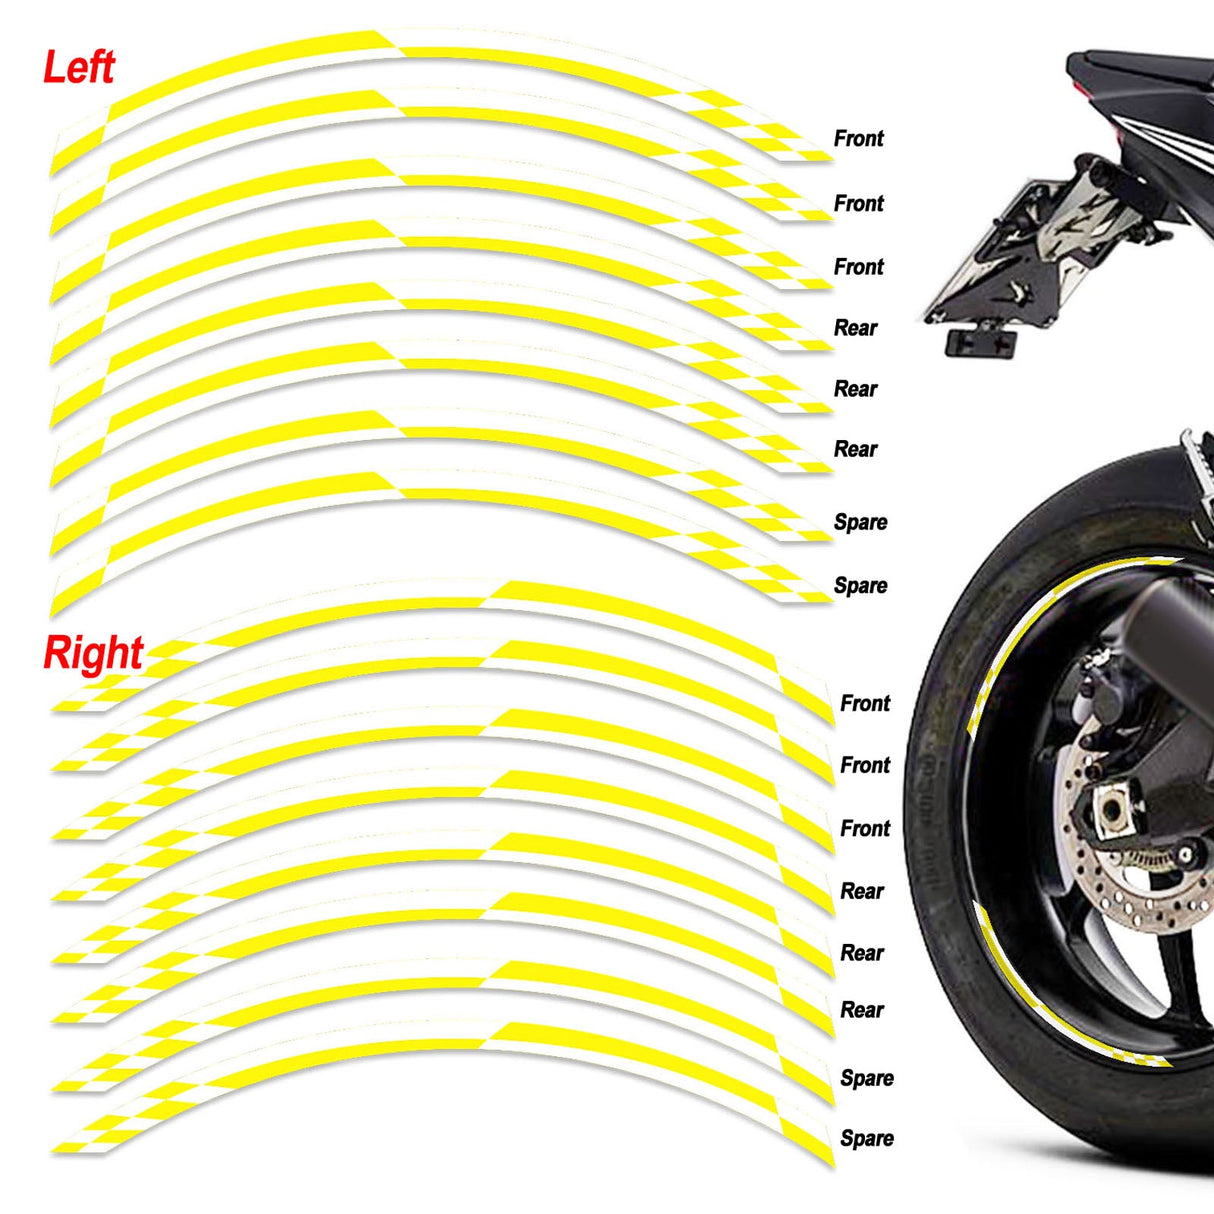 StickerBao Yellow Universal 17 inch Motorcycle Check01 White Standard Edge Rim Sticker Check Rim Wheel Decal For For Suzuki